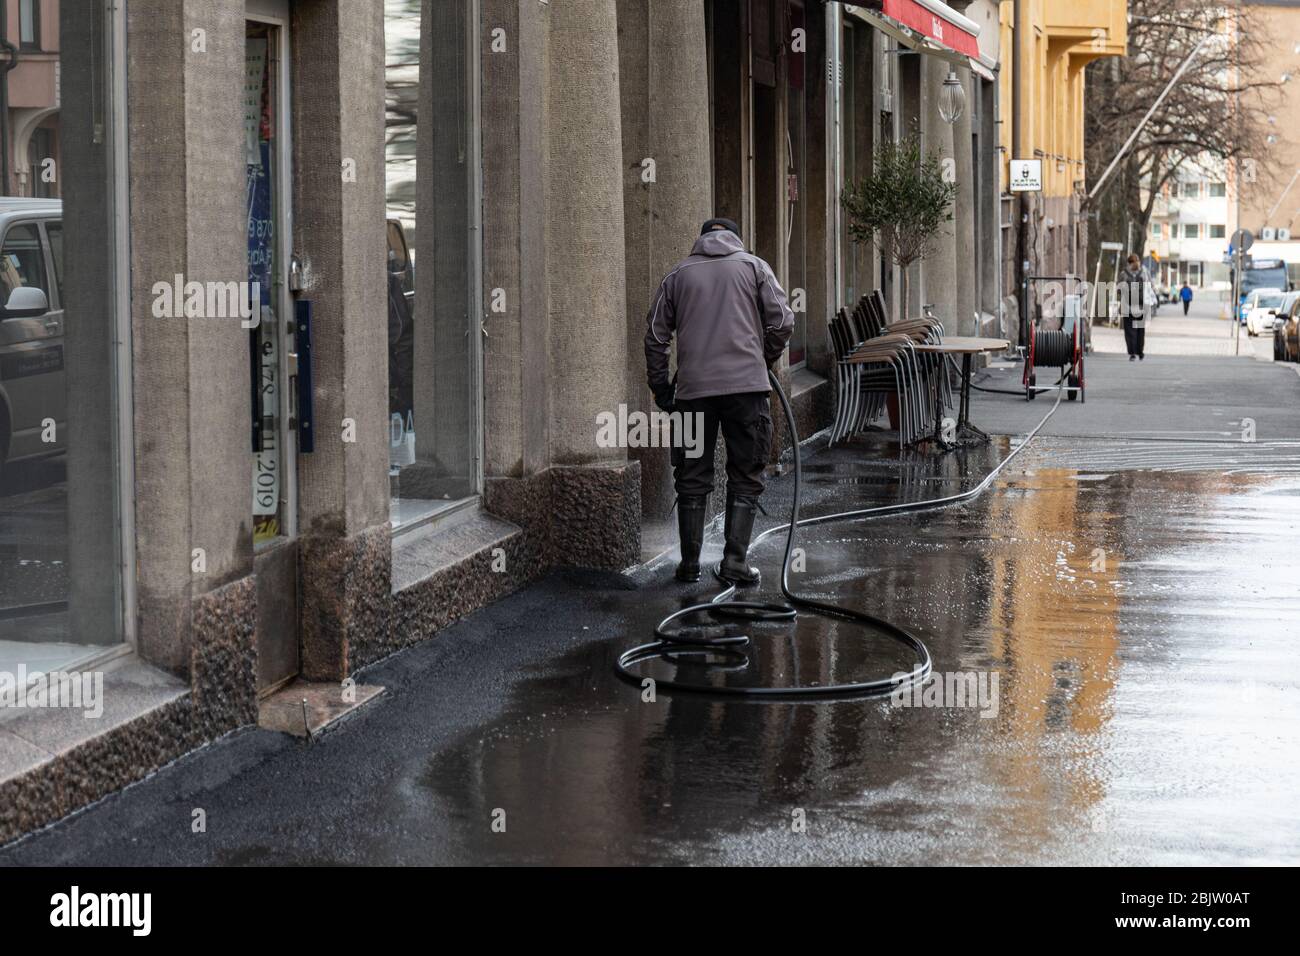 Kaliber Betreffende Ramen wassen Man in rubber boots hosing down sidewalk in Kallio district of Helsinki,  Finland Stock Photo - Alamy